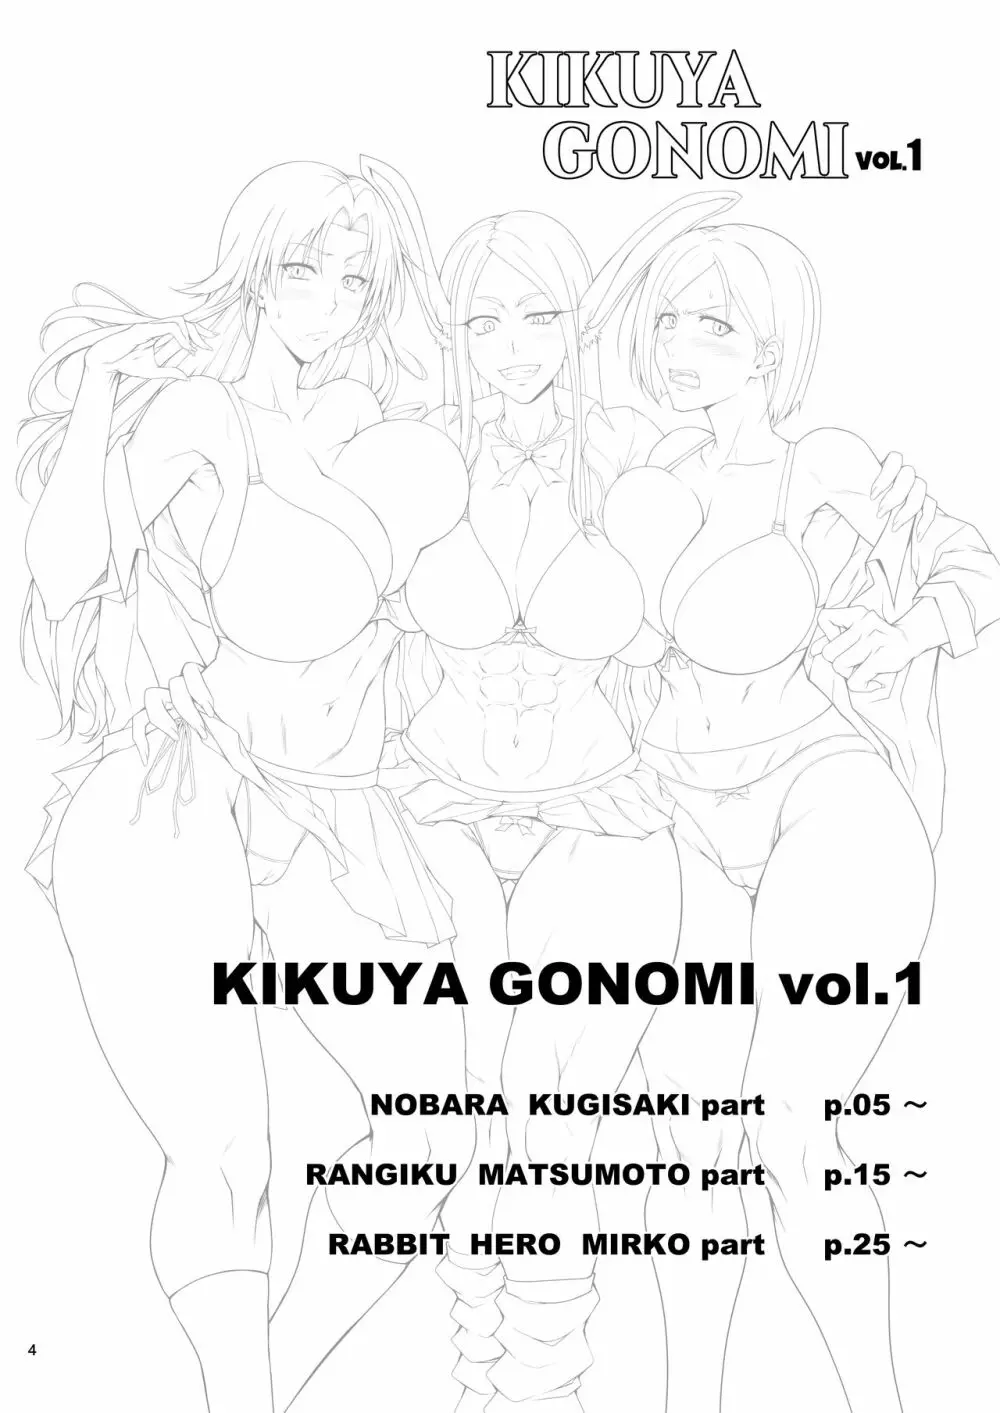 KIKUYA GONOMI vol.1 3ページ